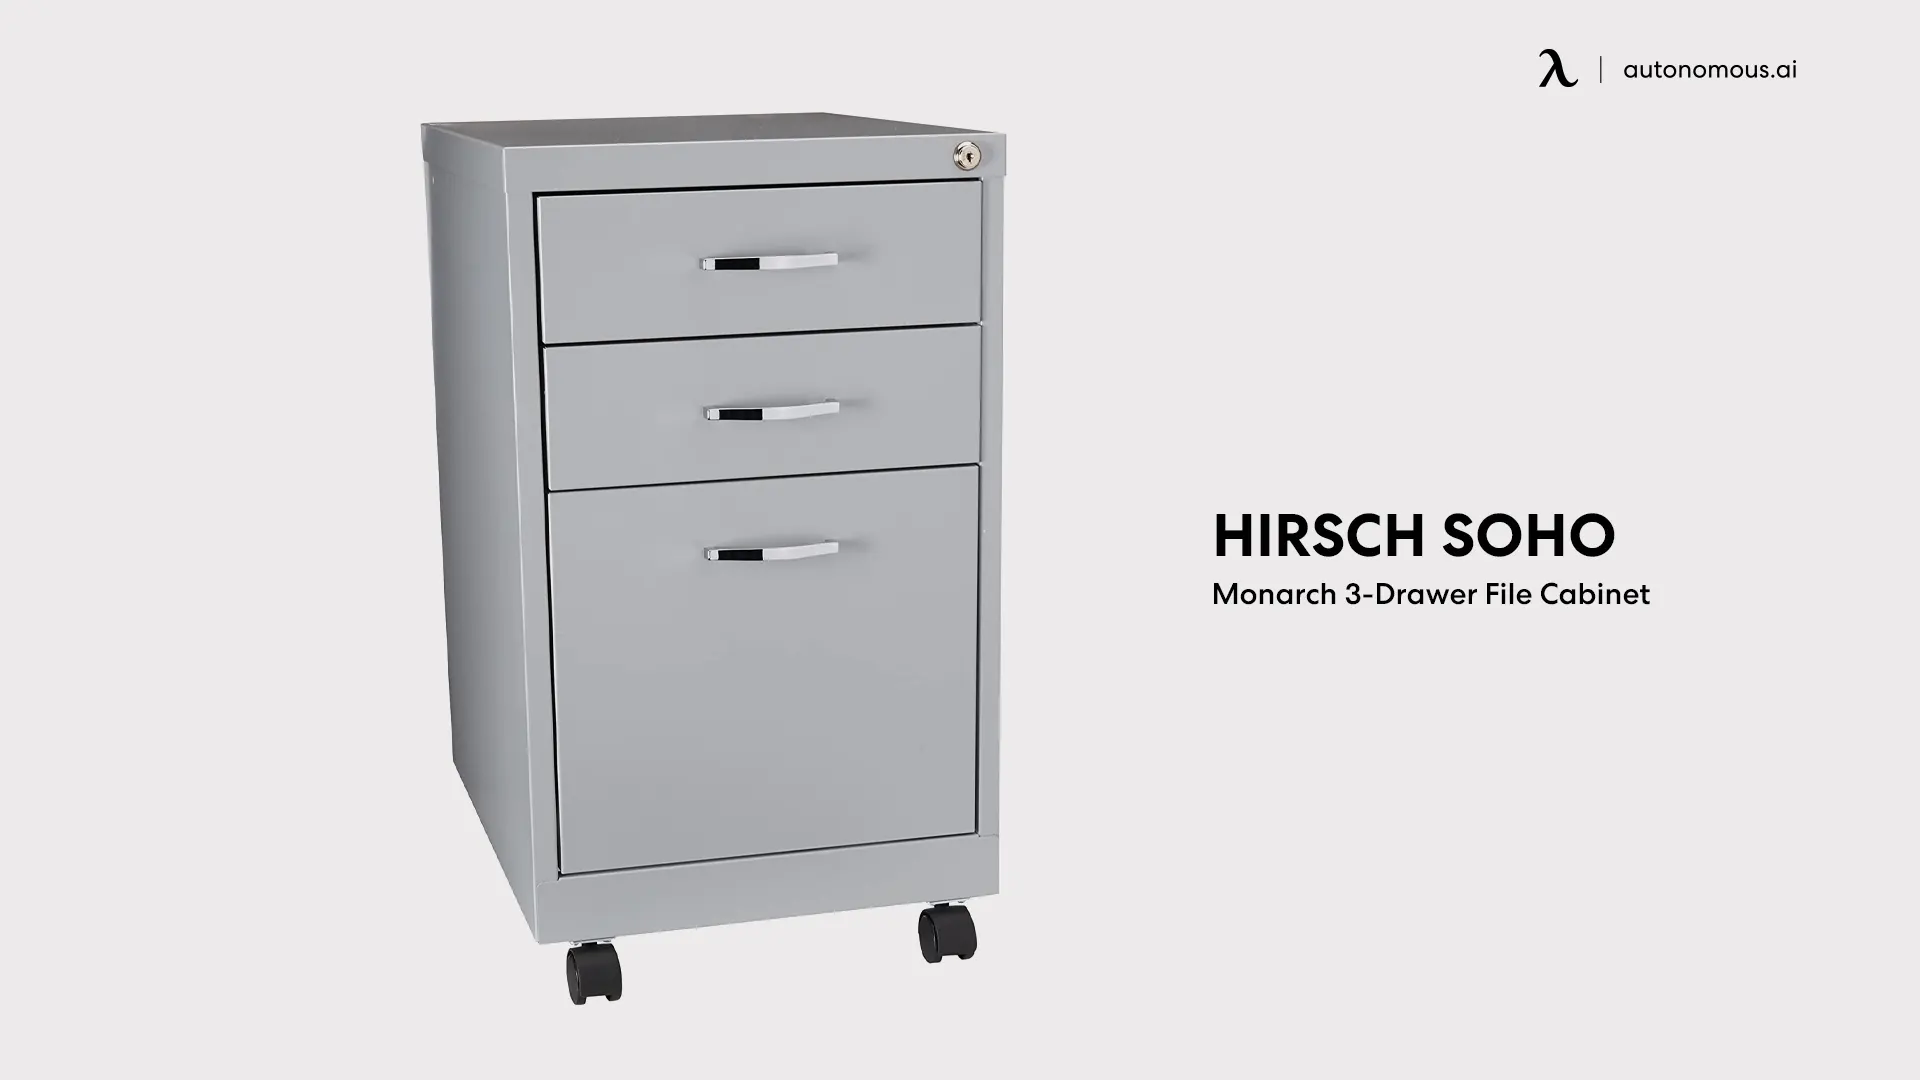 Hirsch Soho Monarch 3-Drawer File Cabinet